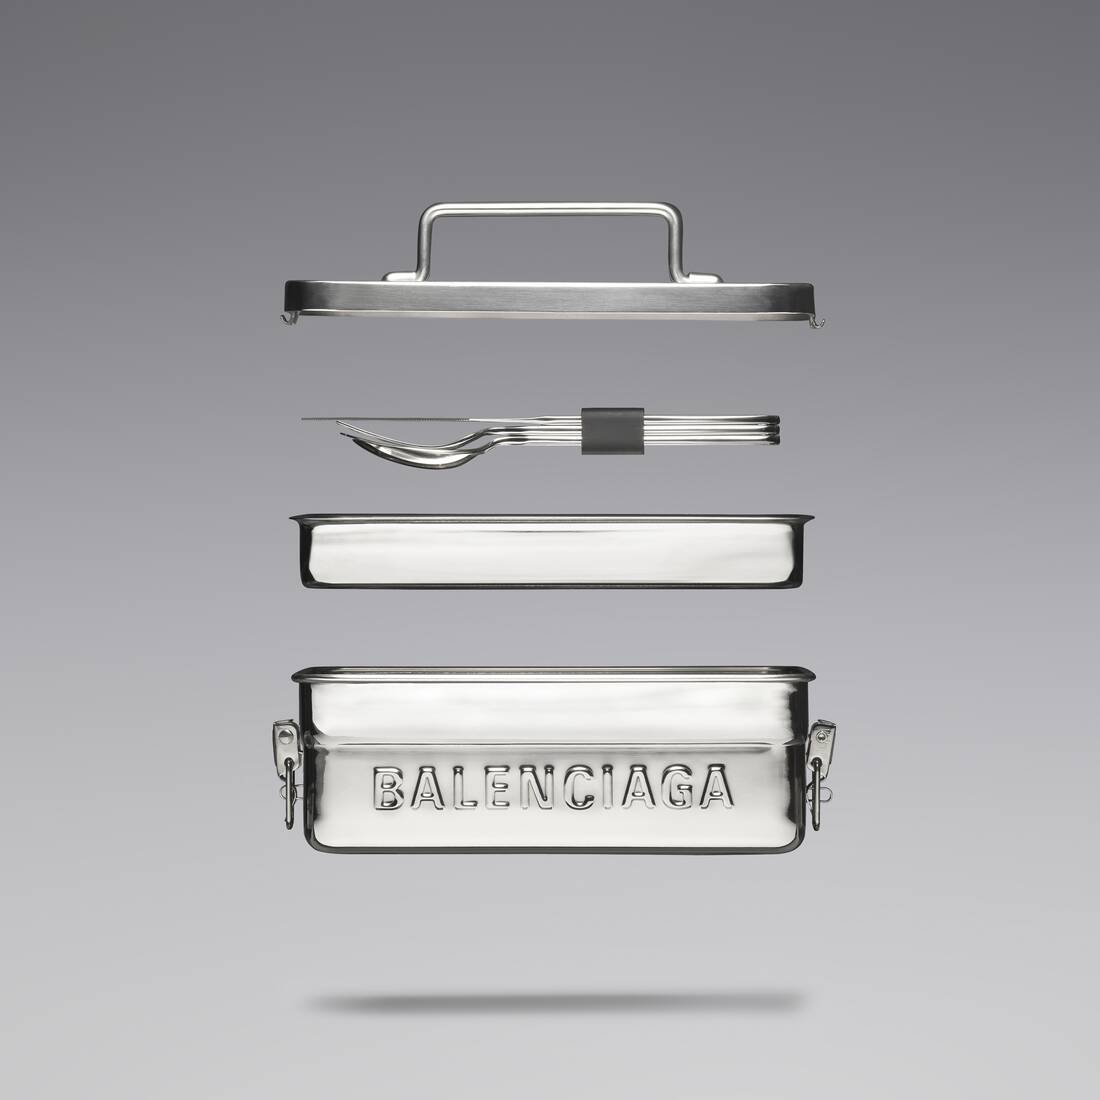 BALENCIAGA-Balenciaga Black Lunch Box Mini Case with Leather Strap